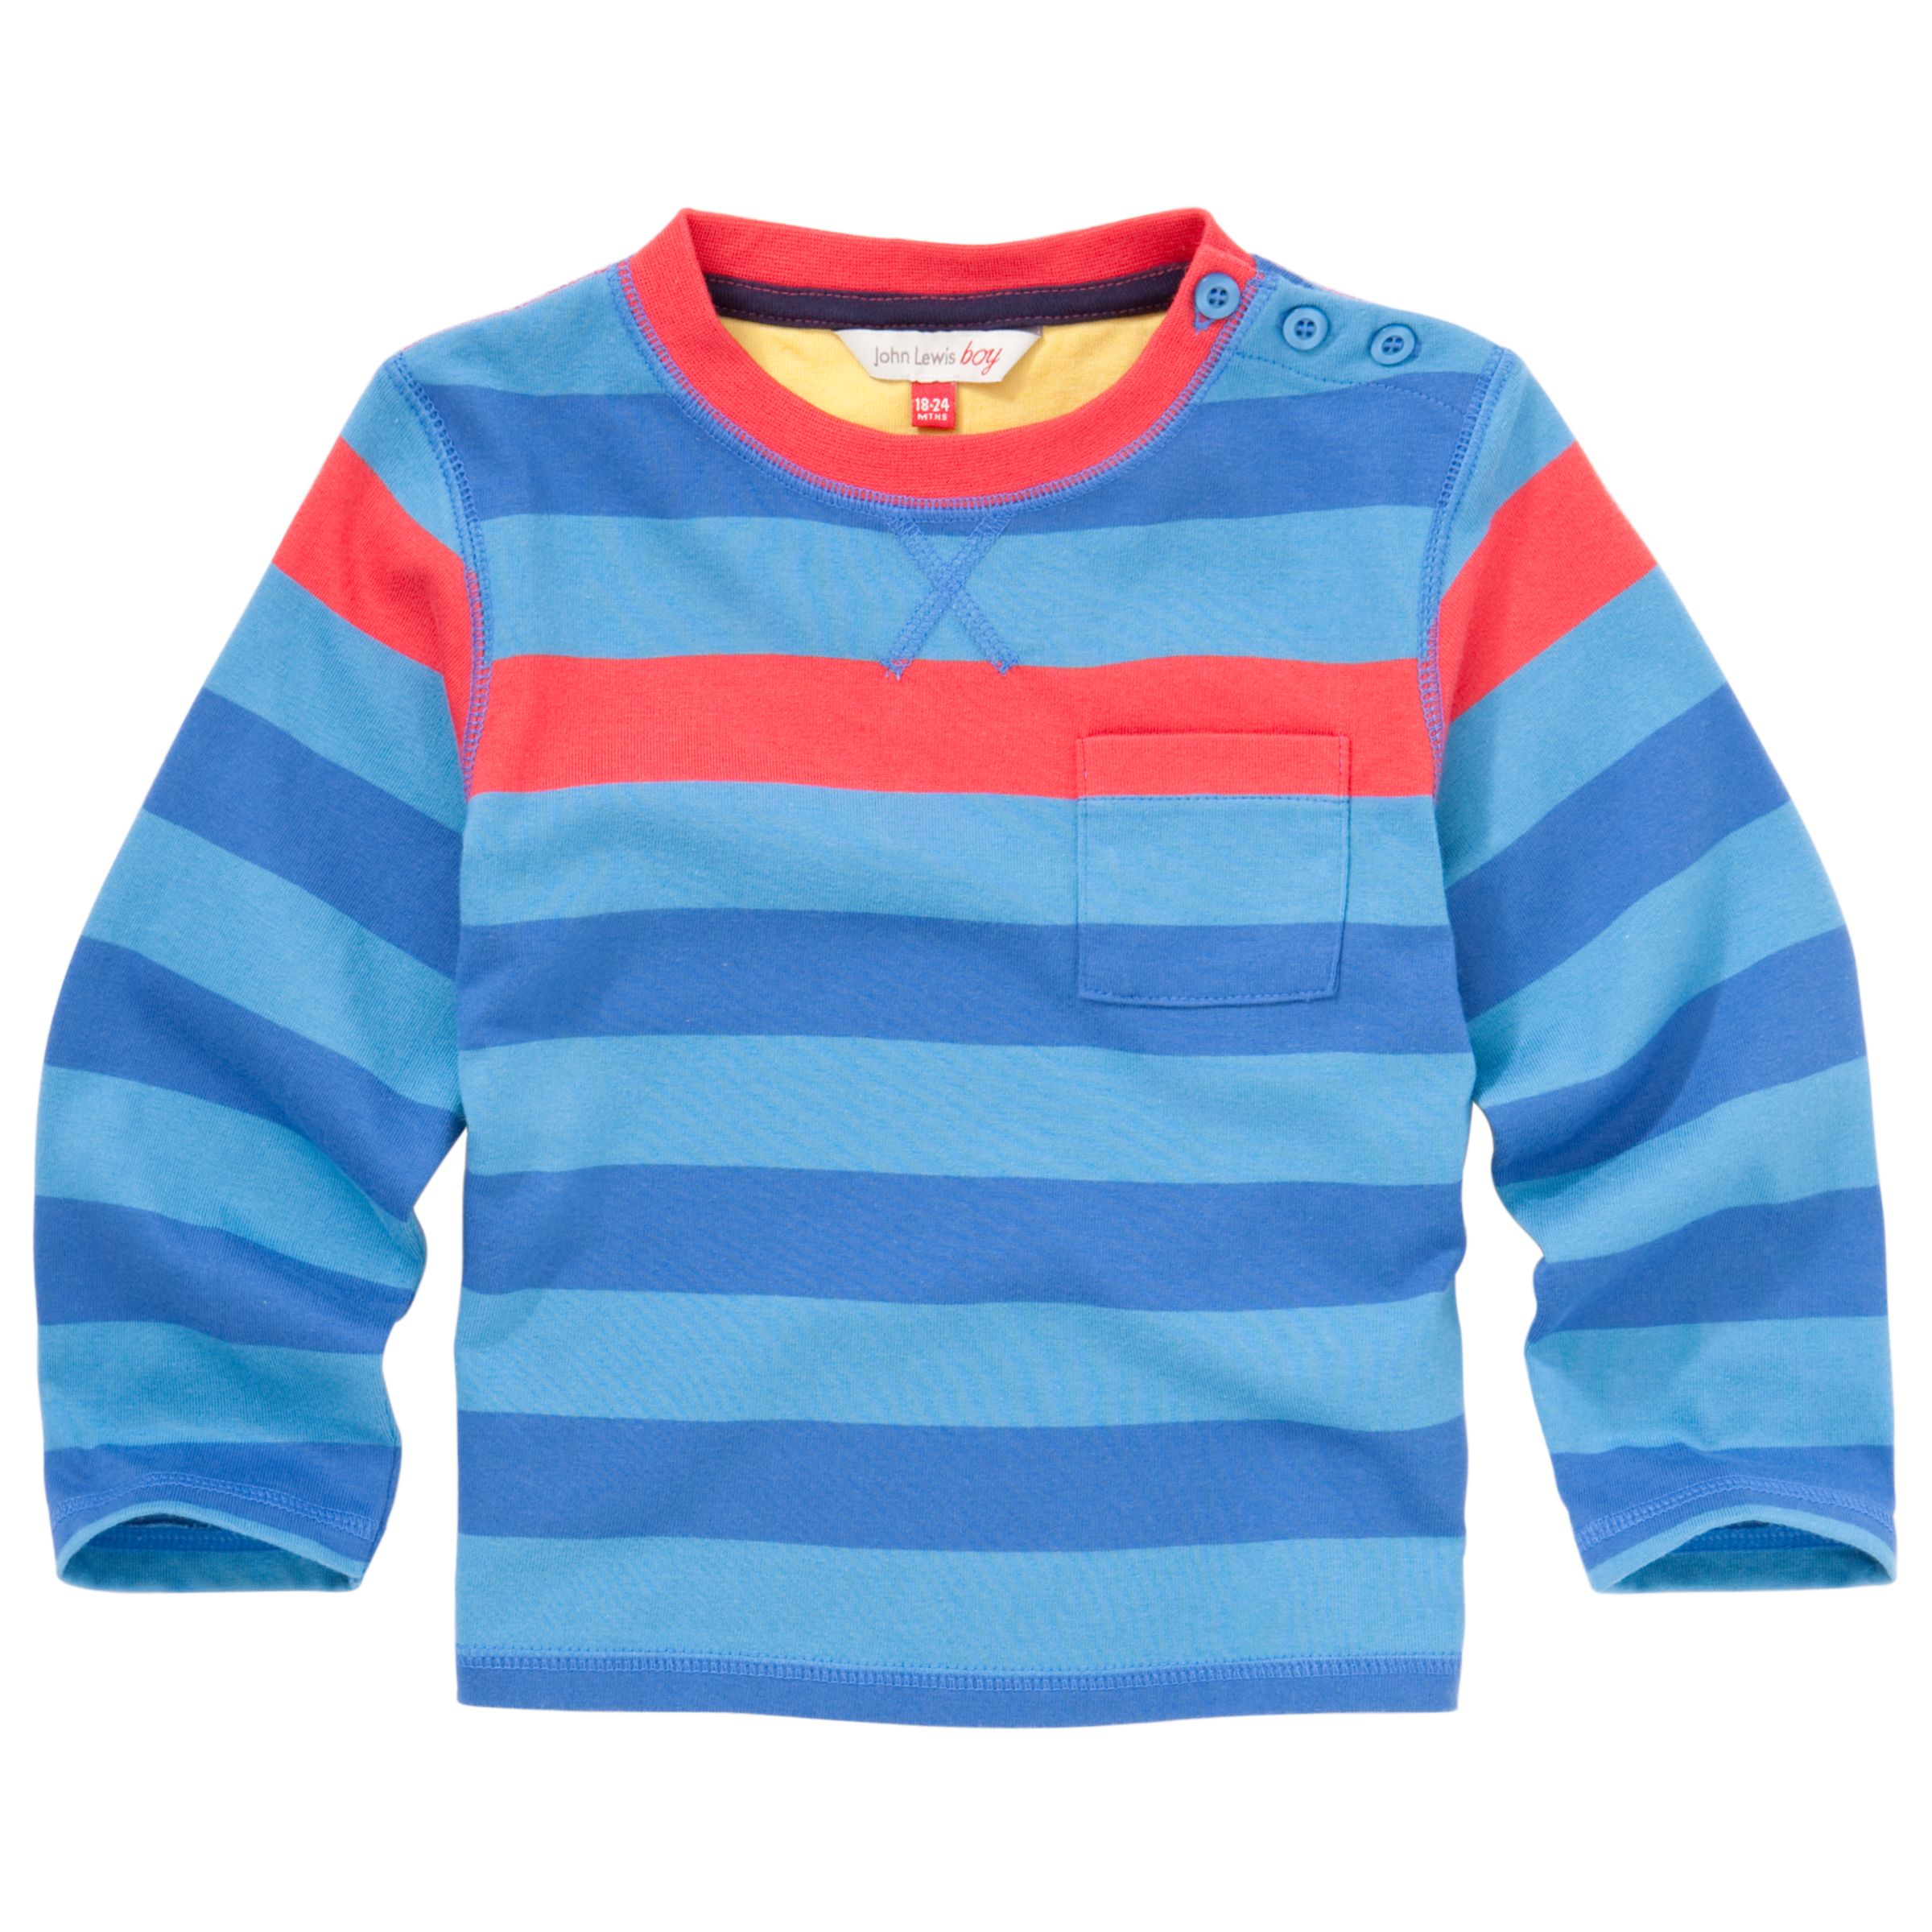 John Lewis Boy Centre Stripe T-Shirt, Blue/Red